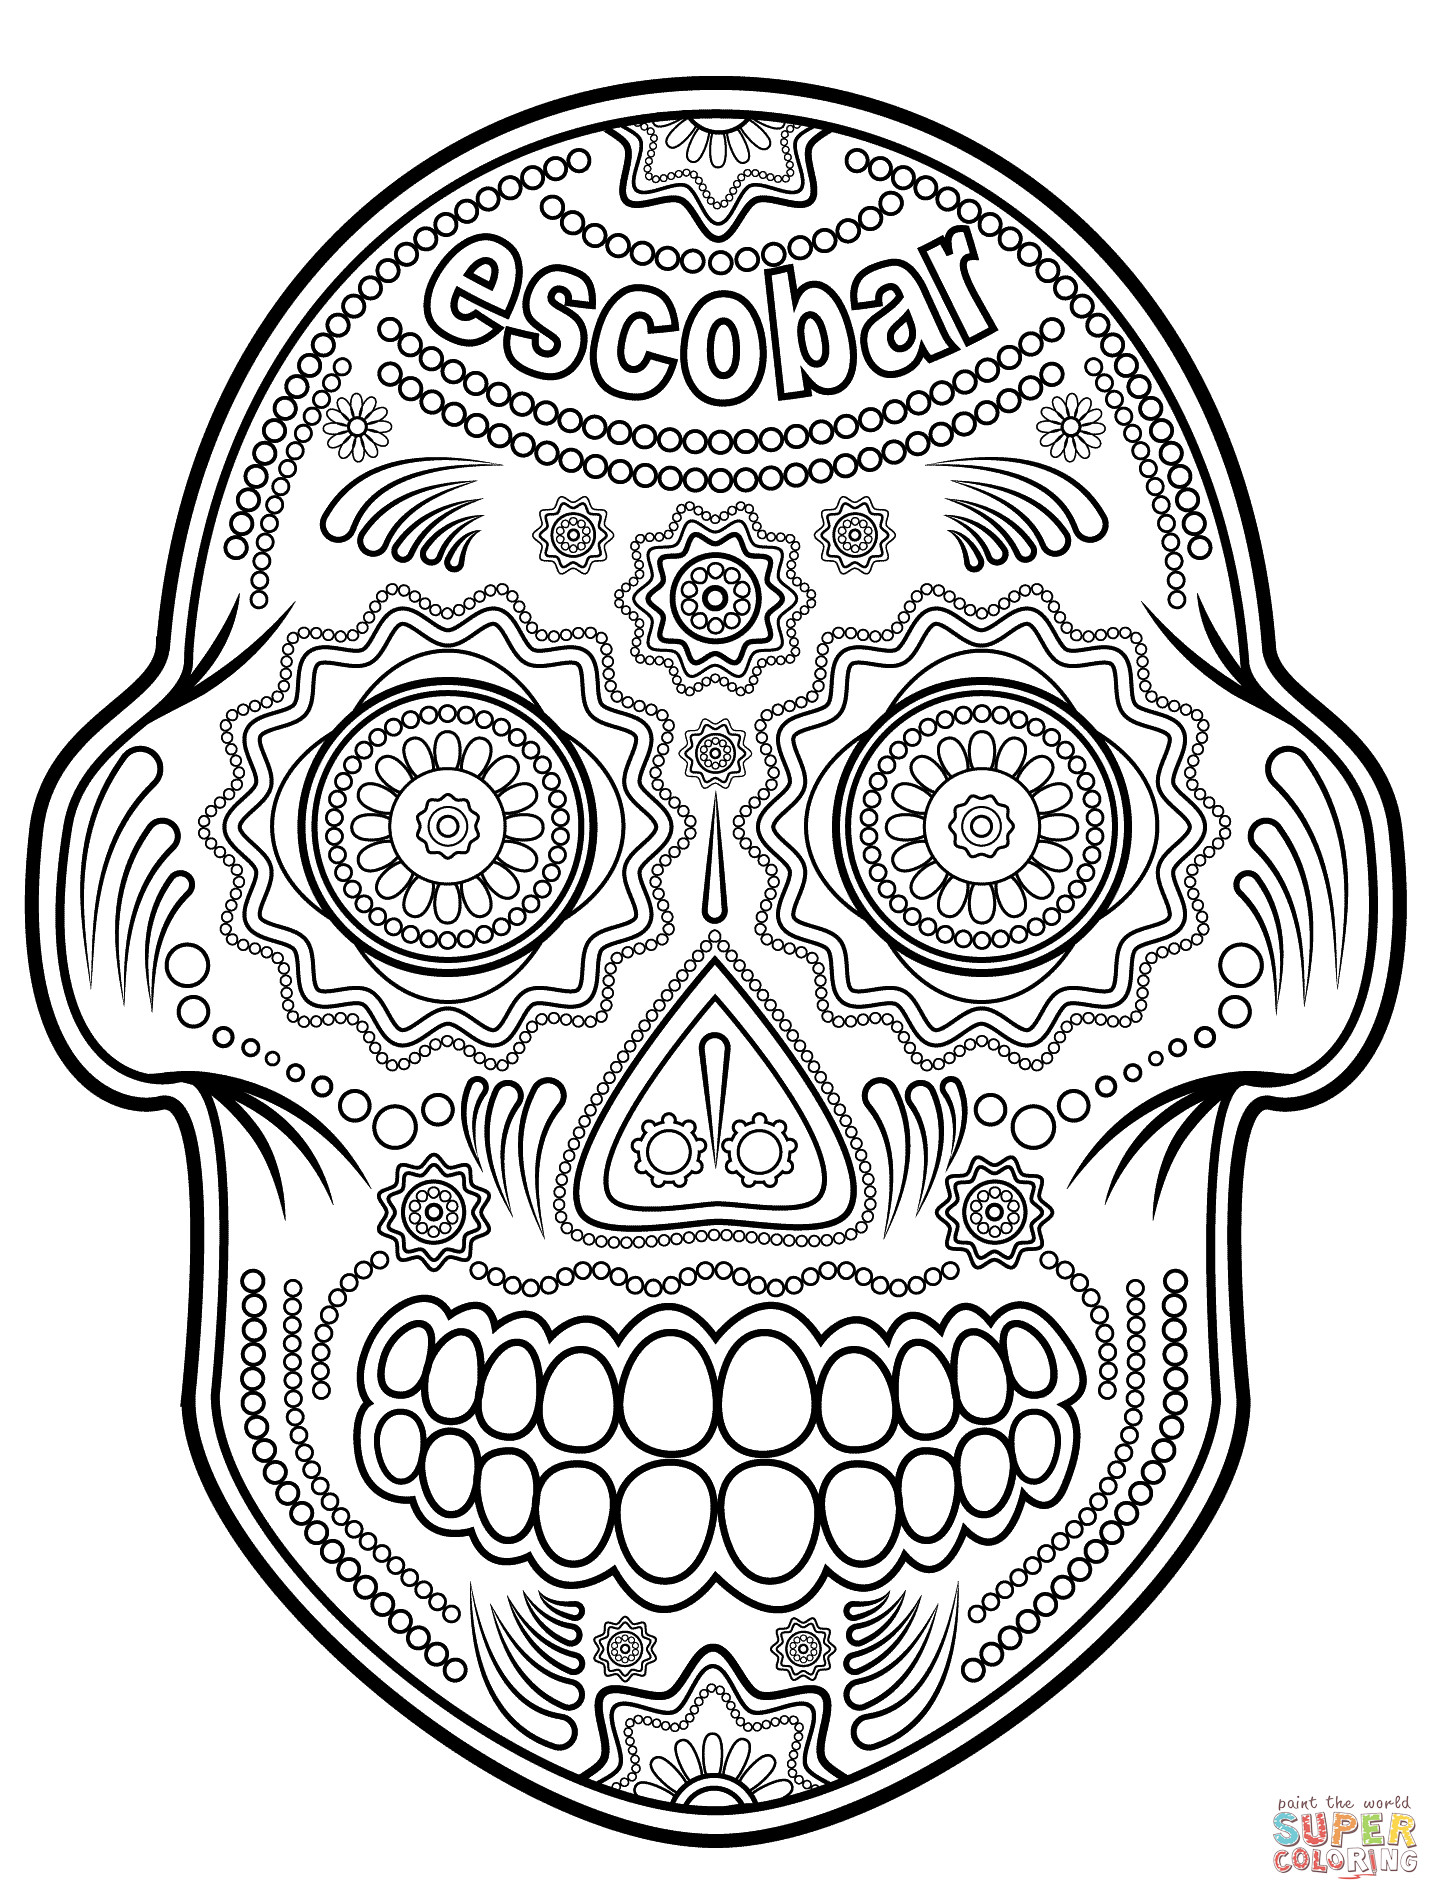 Boys Skull Coloring Pages
 Escobar Sugar Skull coloring page